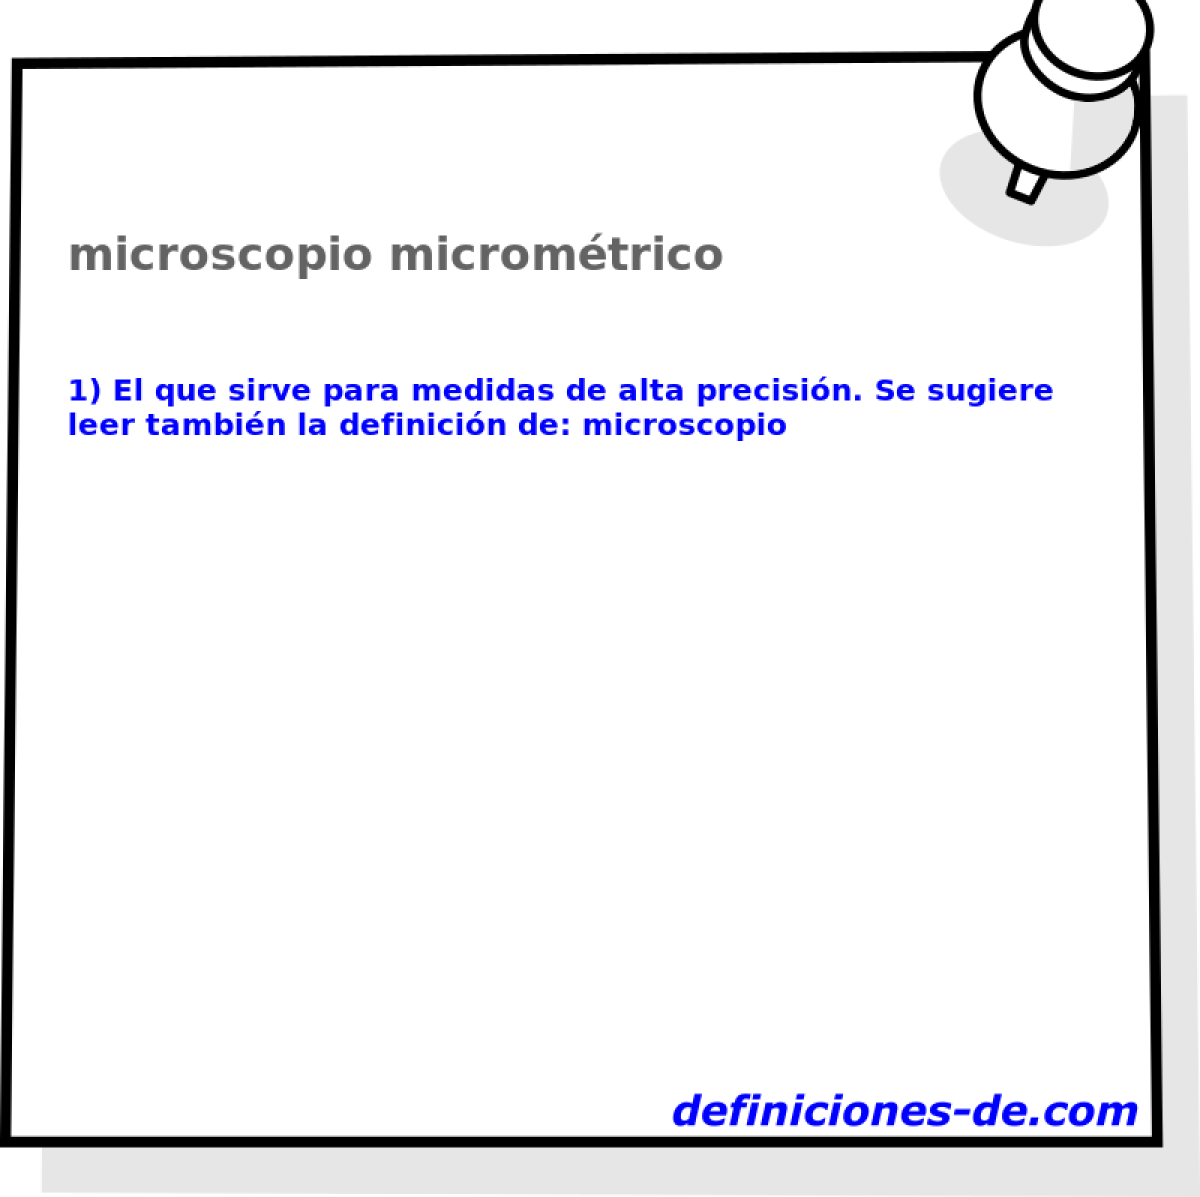 microscopio micromtrico 